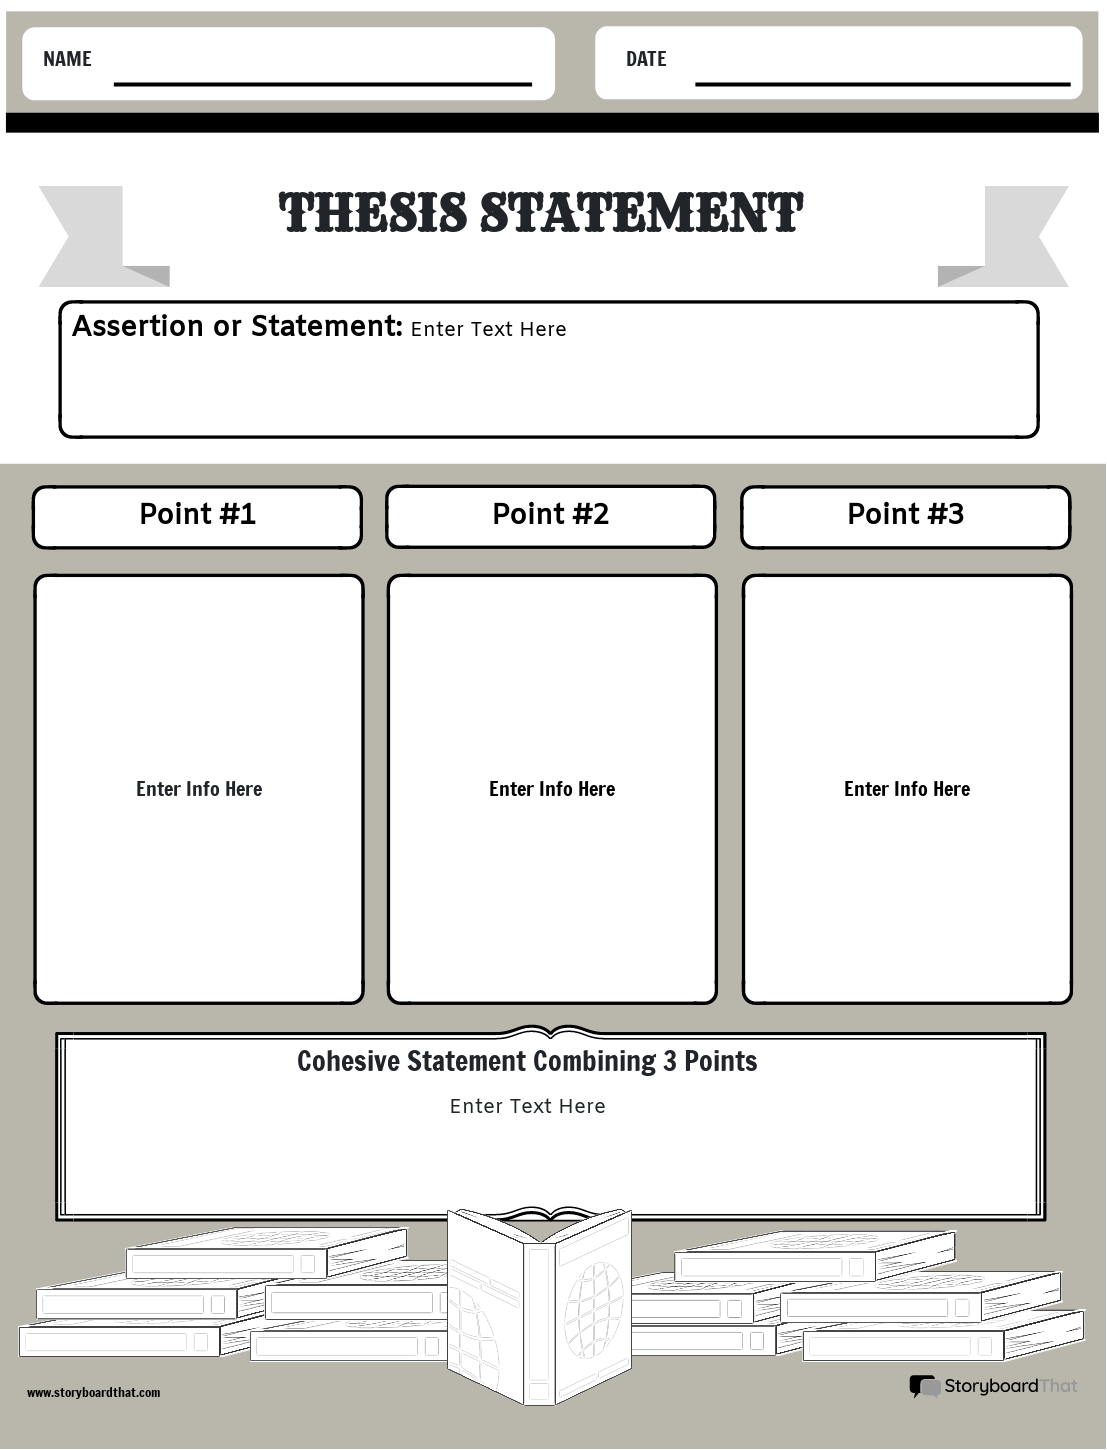 Planning Sheet Thesis Statement